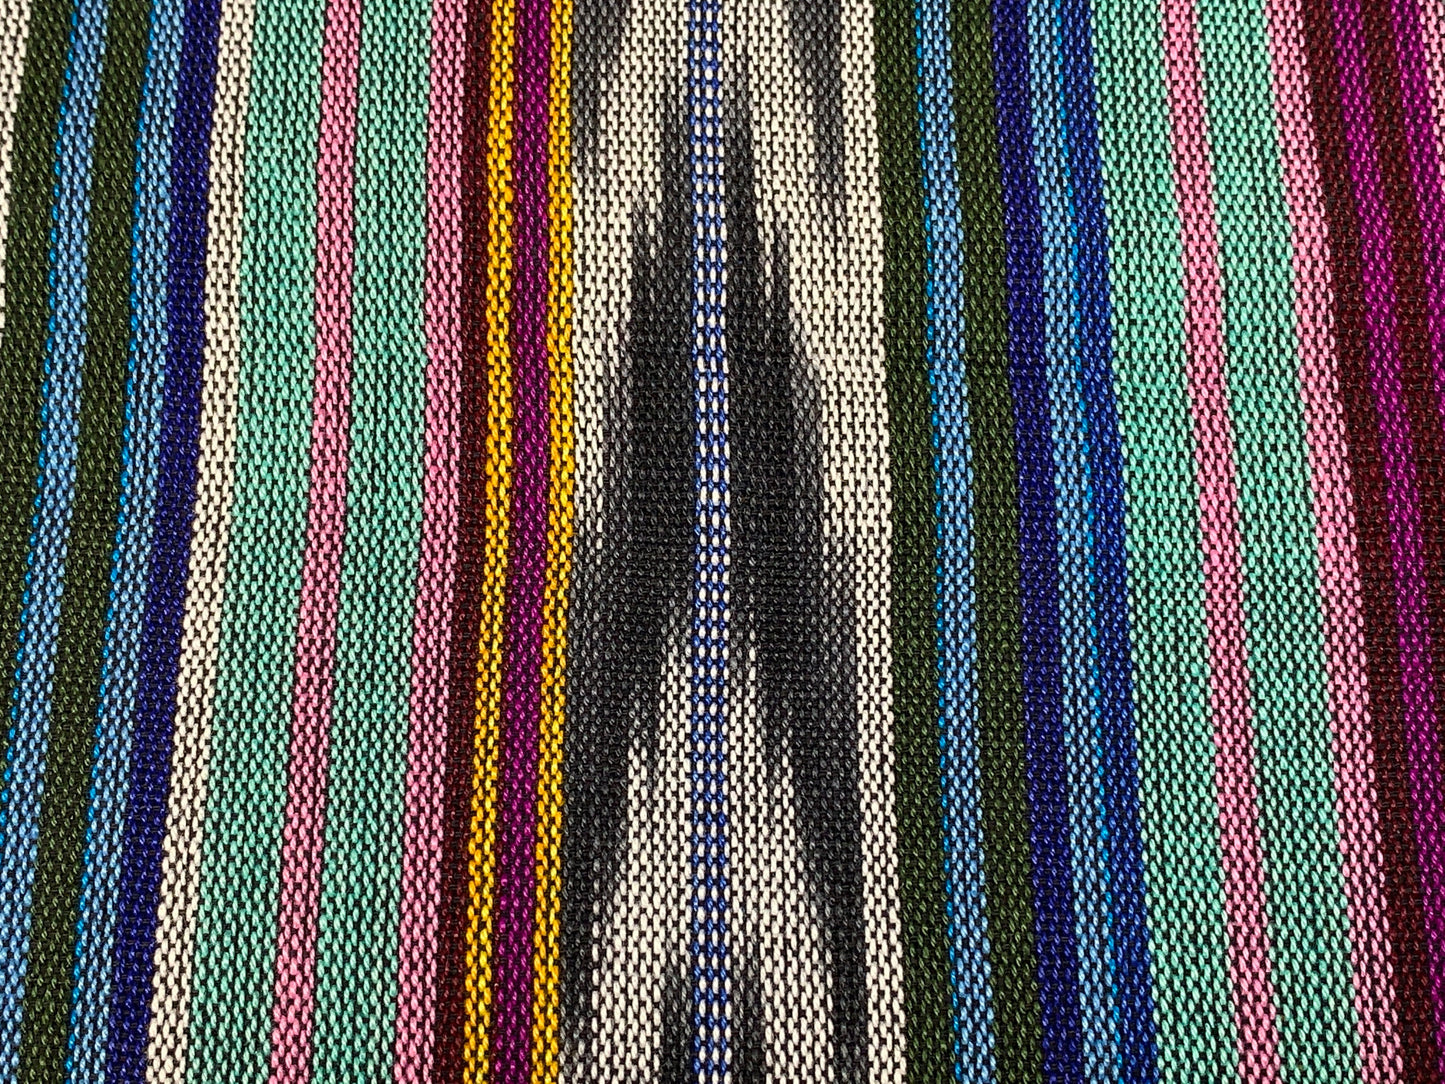 Guatemalan Ikat Gray & Pastel Stripes